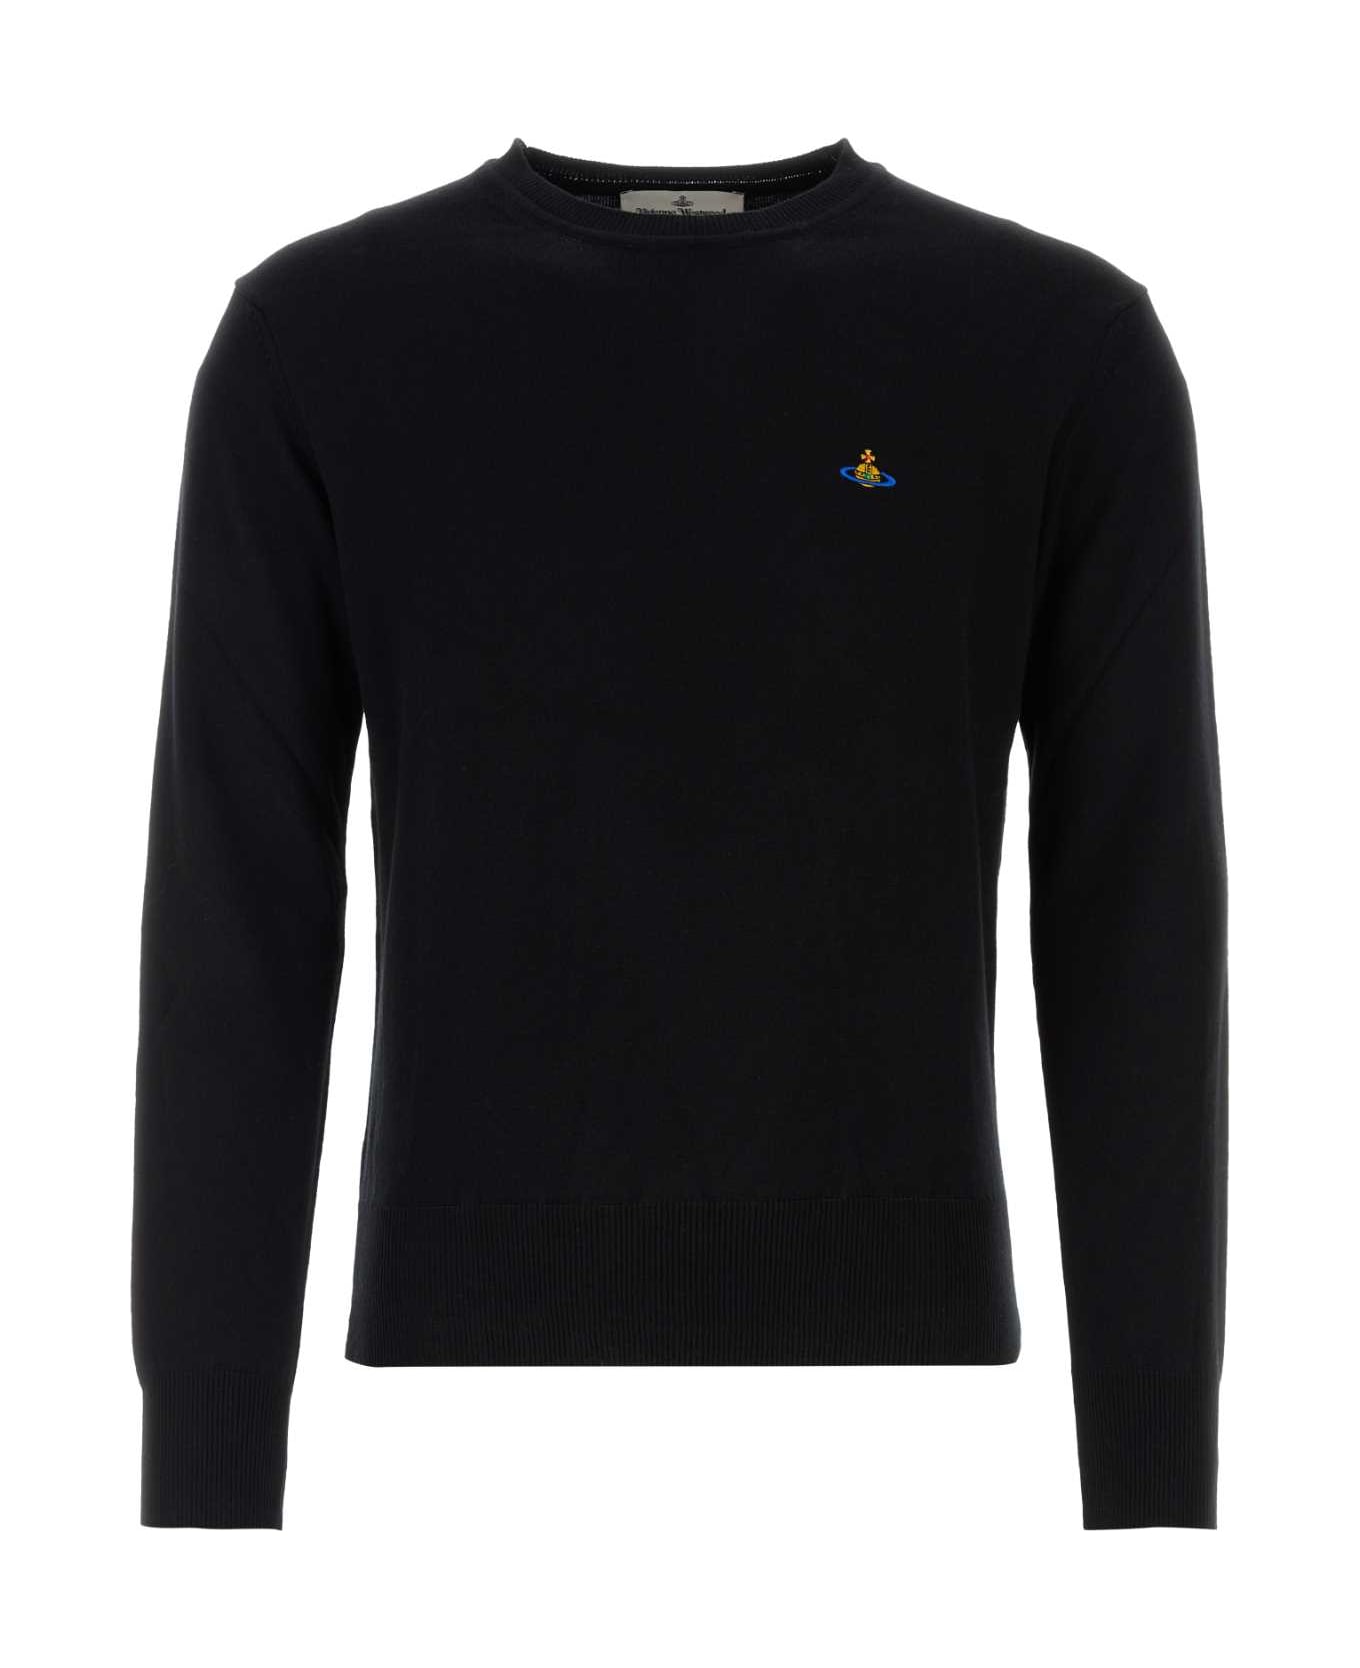 Vivienne Westwood Black Cotton Blend Sweater - Black